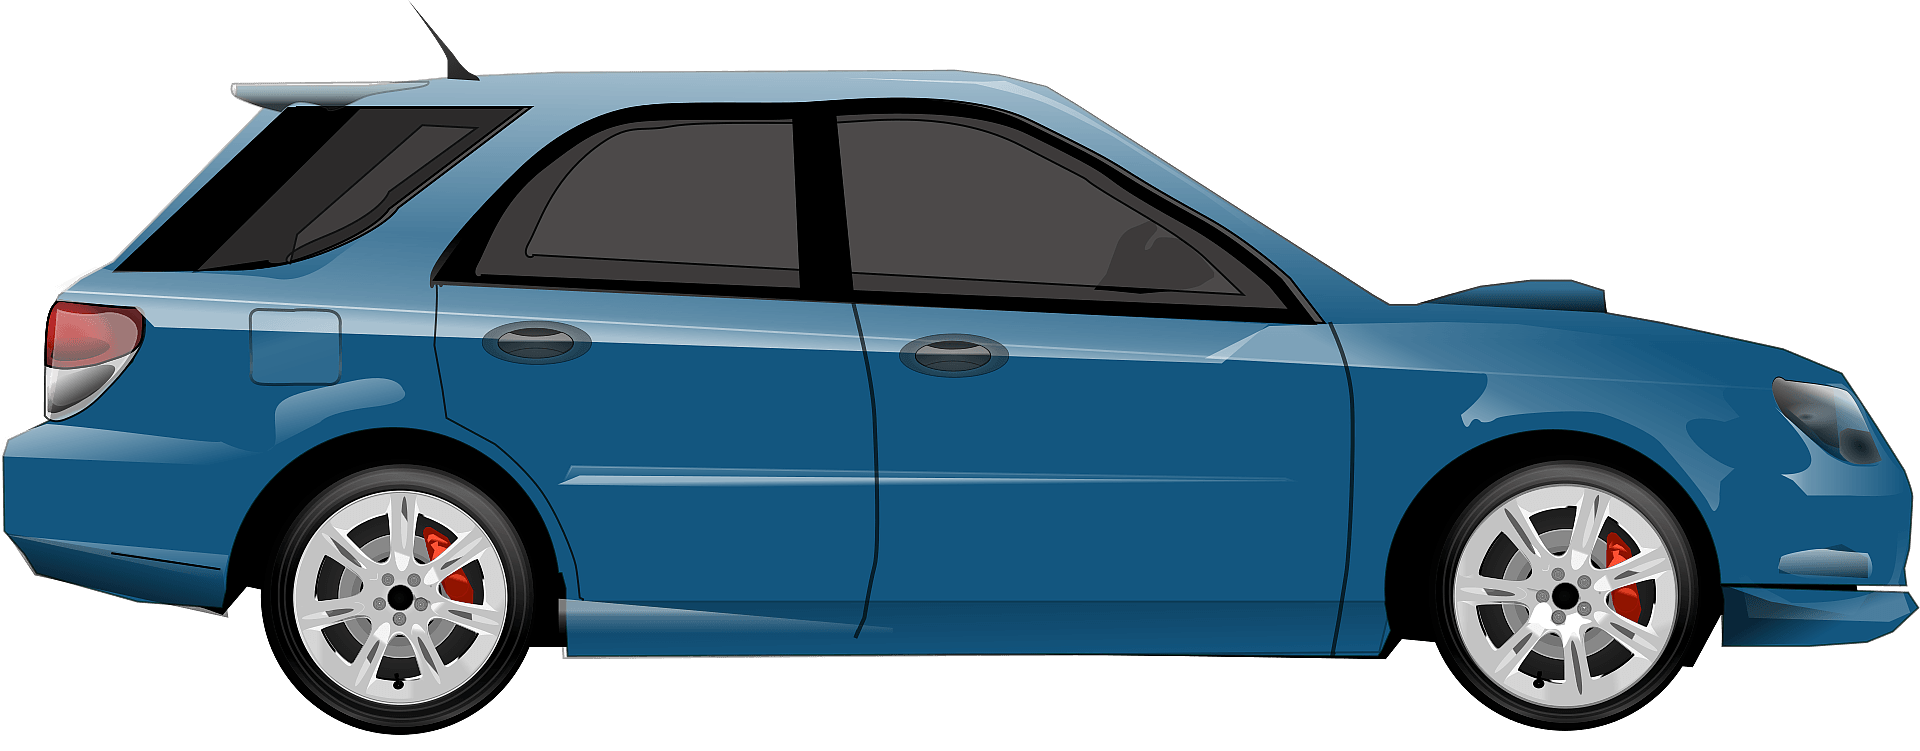 Subaru Impreza No Background